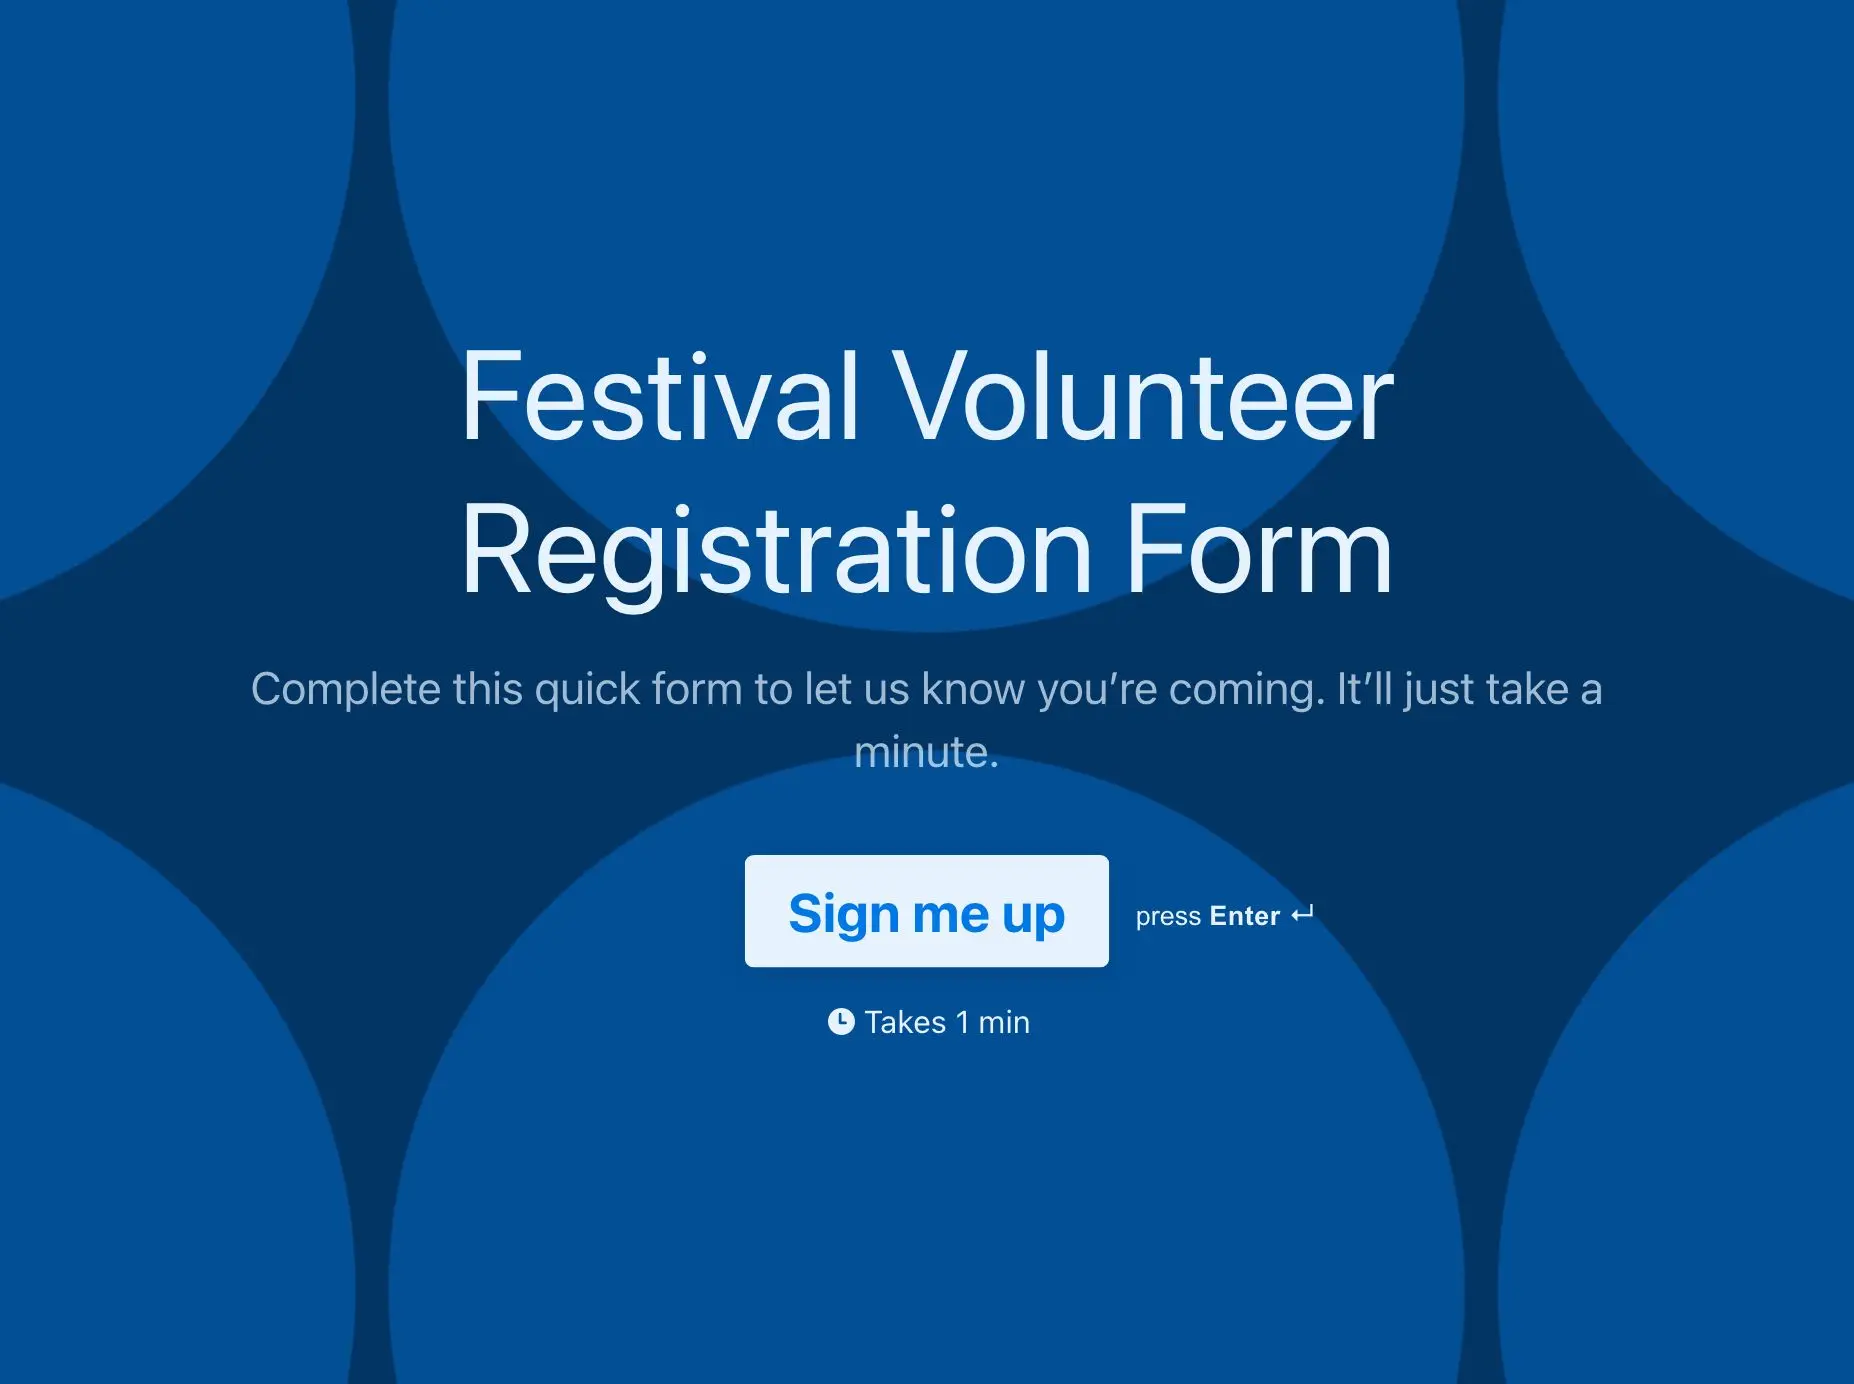 Festival Volunteer Registration Form Template Hero